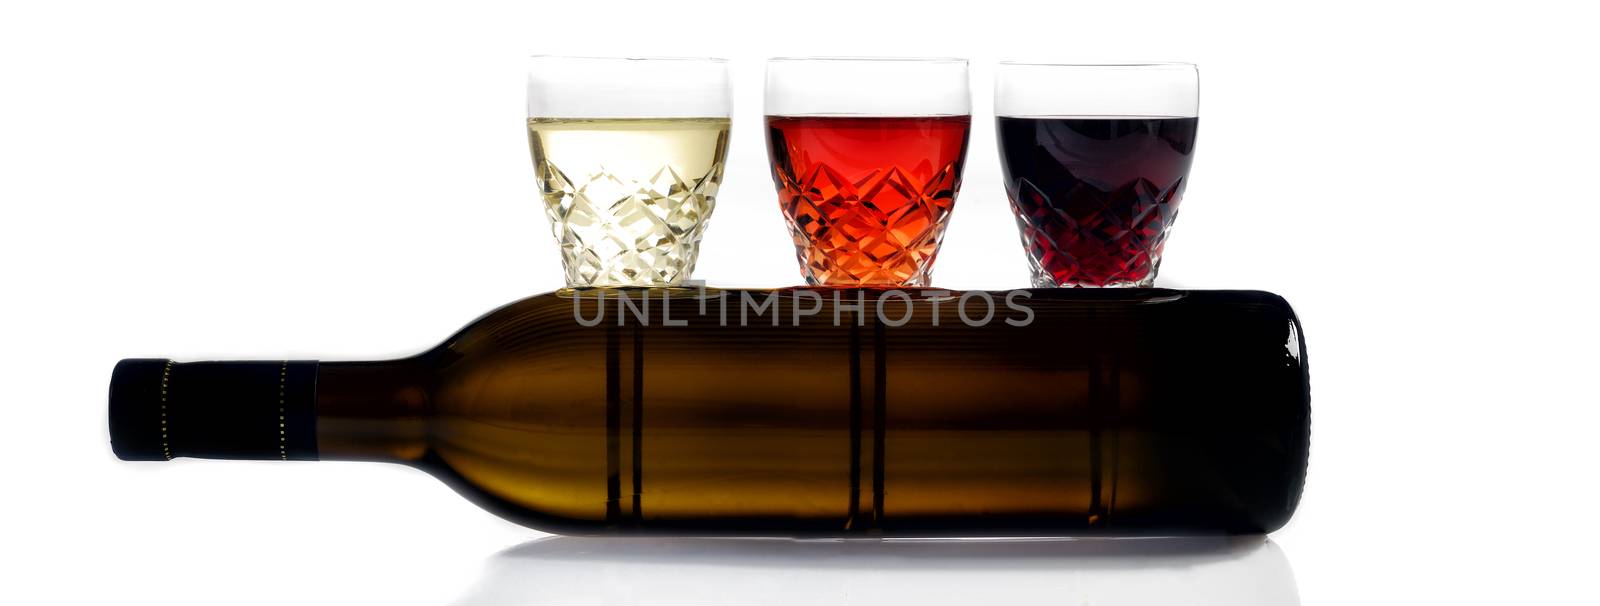 Three glasses of wine, glass, white wine, red wine, rose wine, white background, bottle of wine